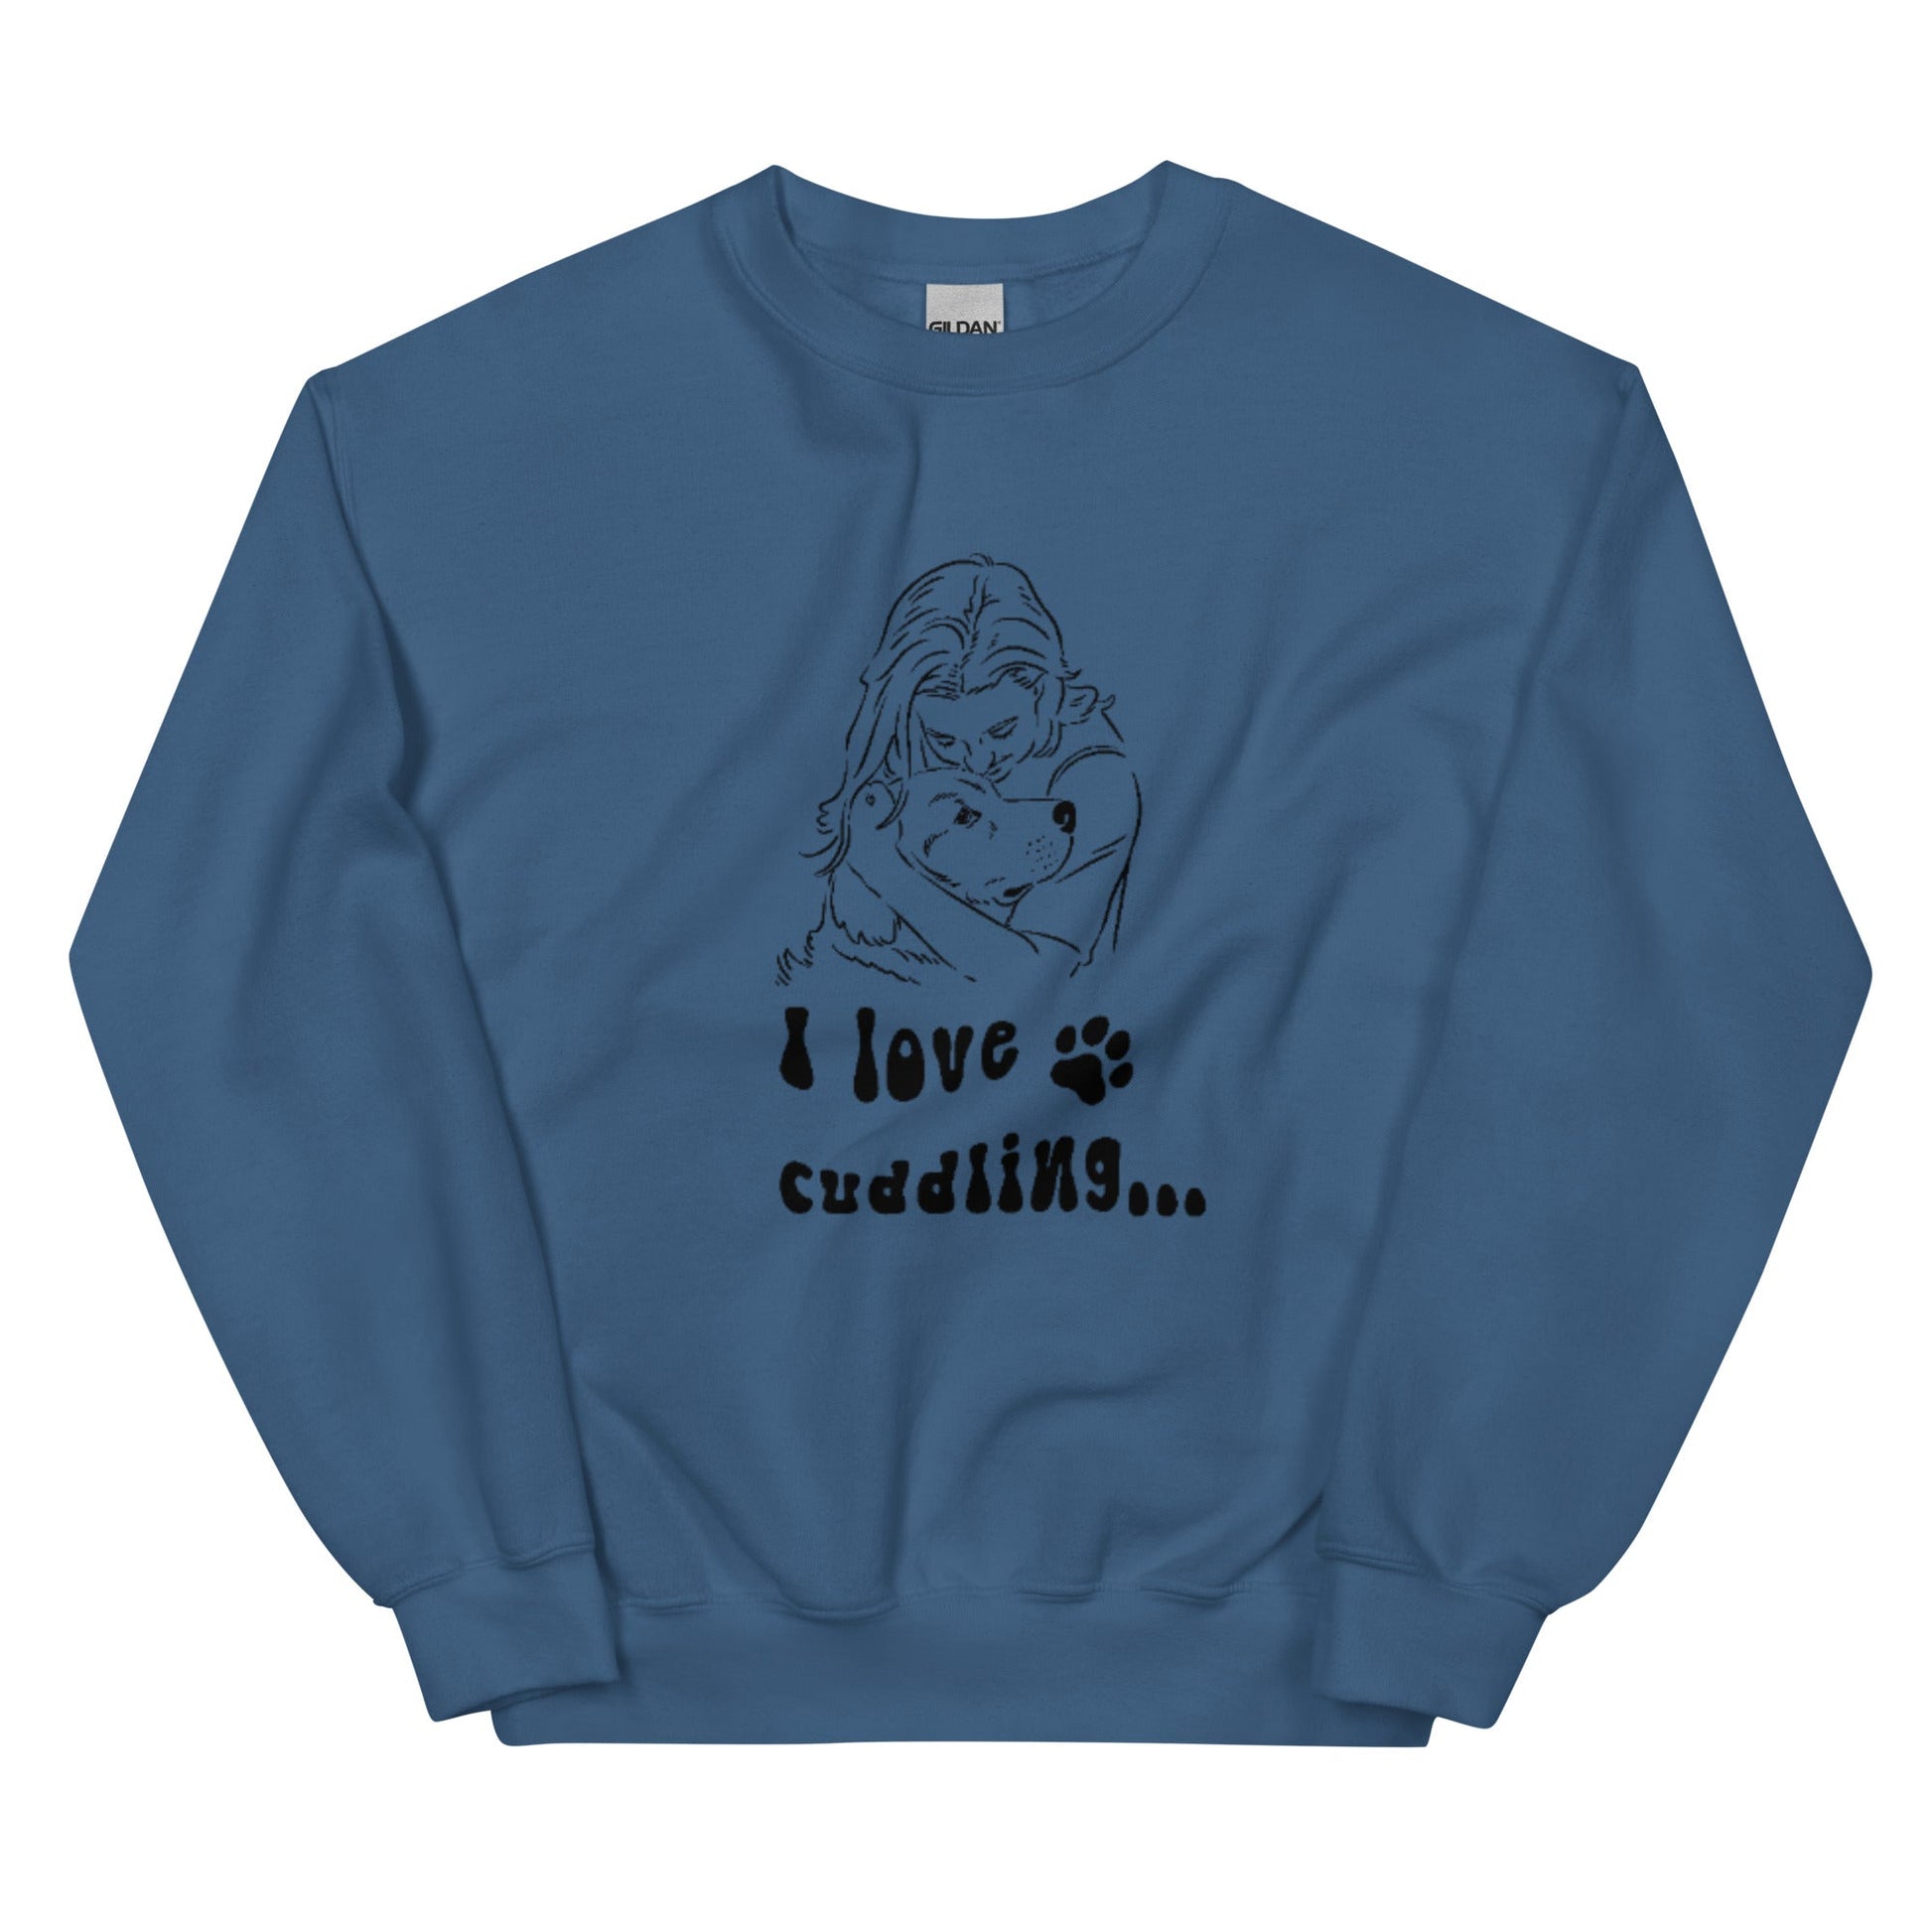 I Love Cuddling Sweatshirt - Indigo Blue / S